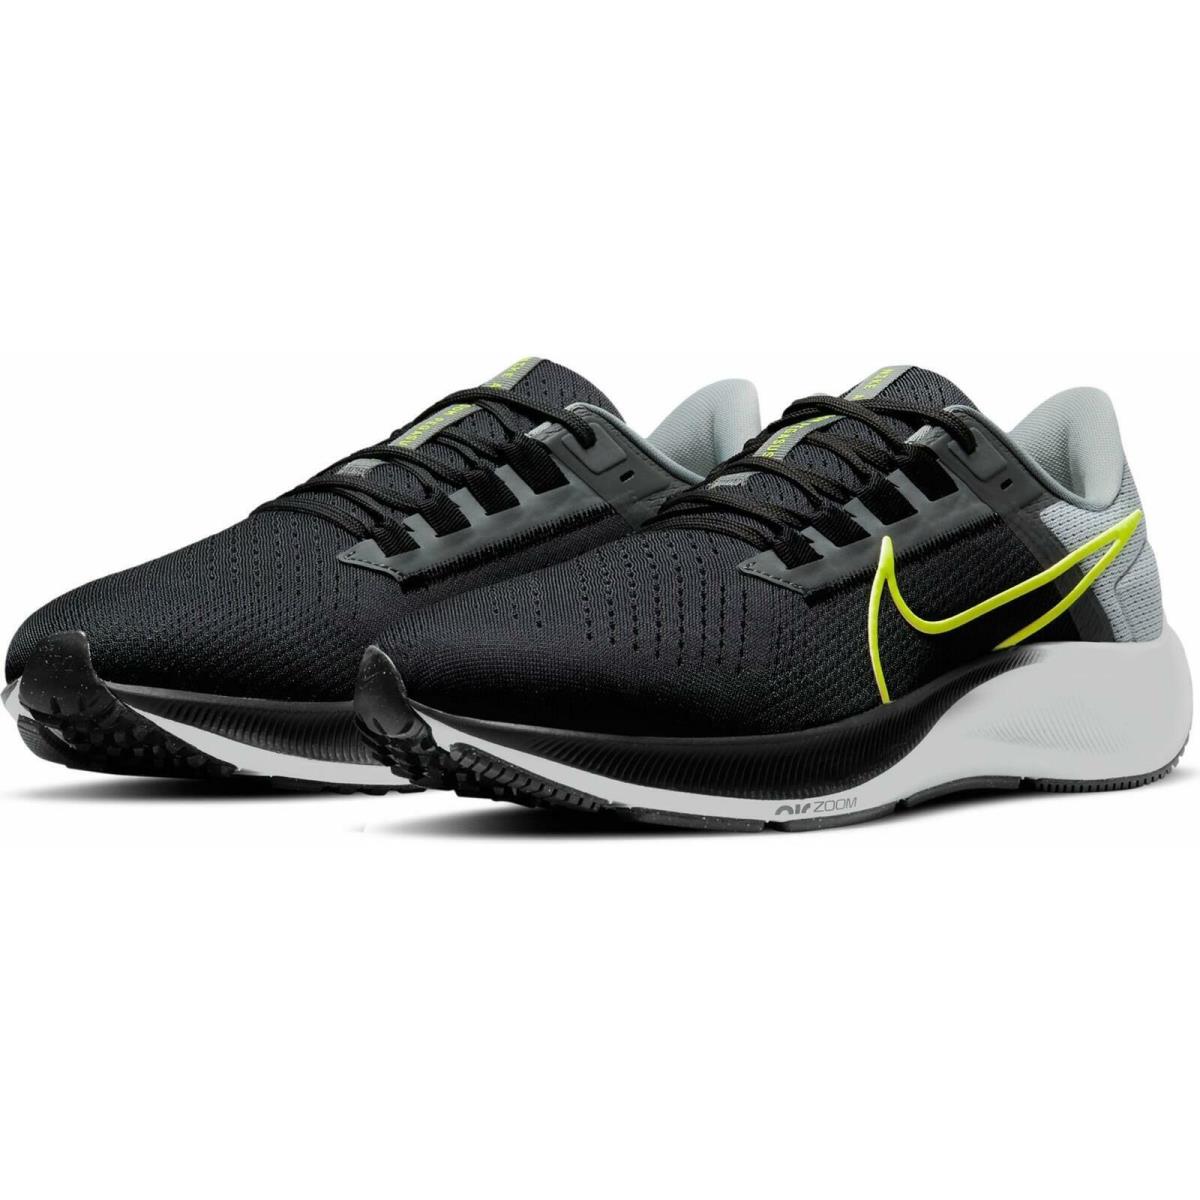 Nike Air Zoom Pegasus 38 Running Shoes Black / Grey / Volt Sz 8 CW7356 005 - Black